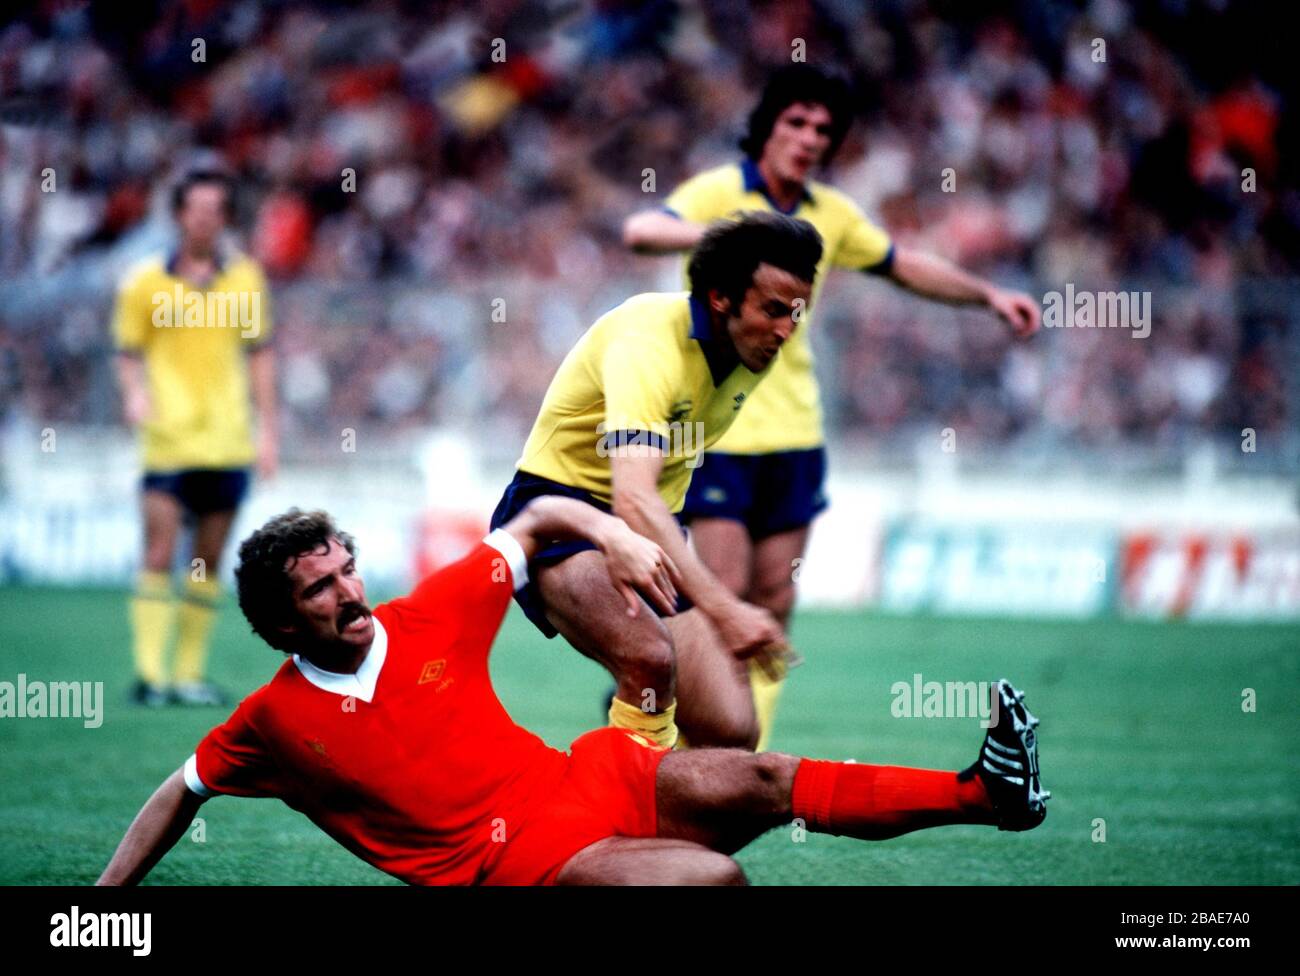 Liverpool's Graeme Souness (l) tackles Arsenal's John Hollins (r) Stock Photo